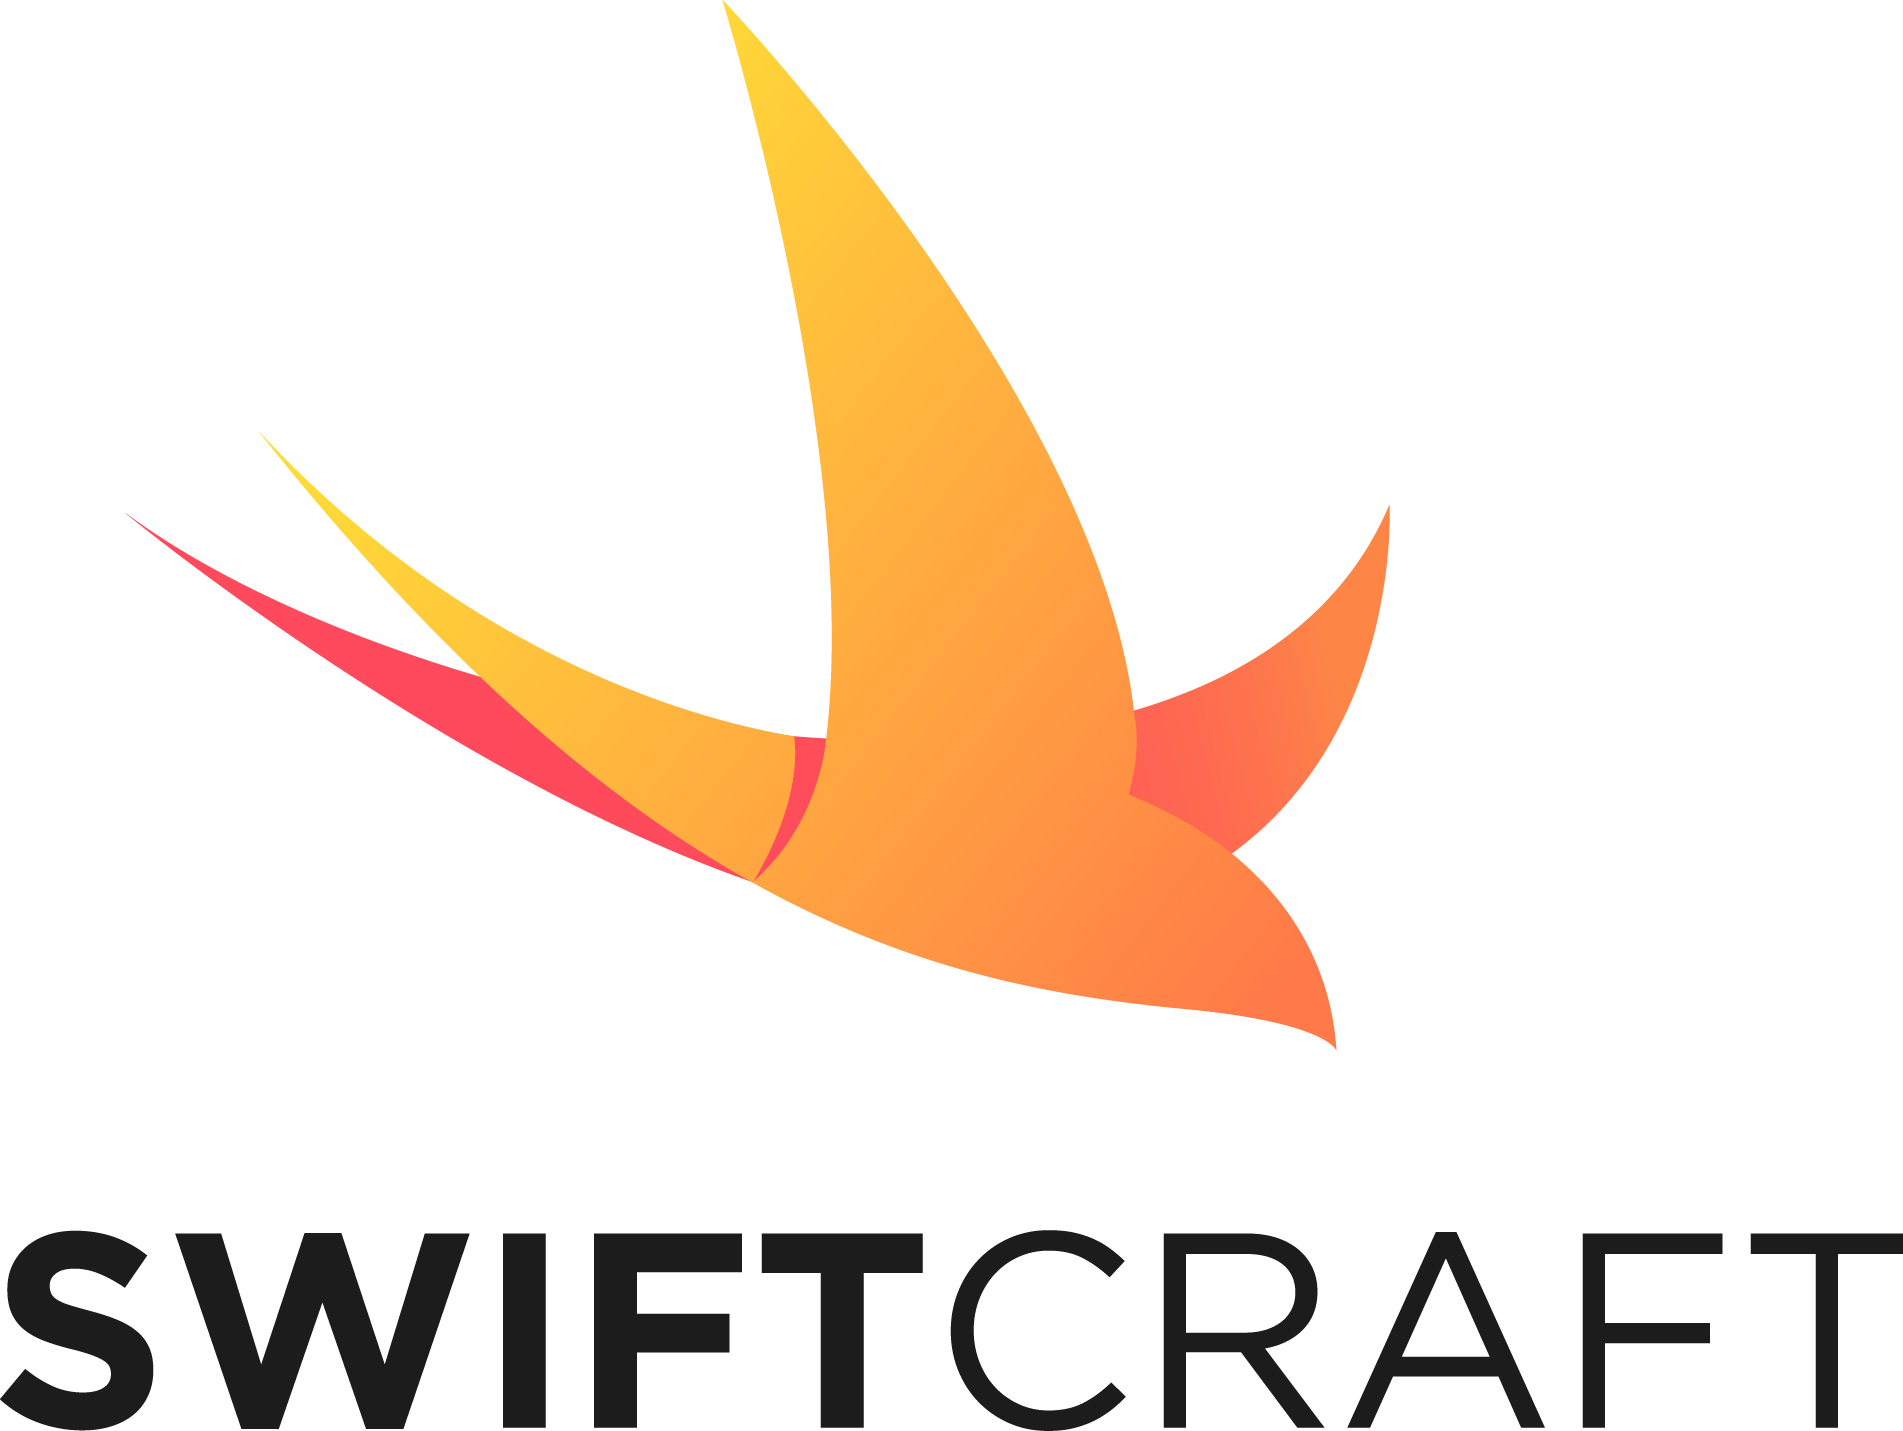 Swift Craft